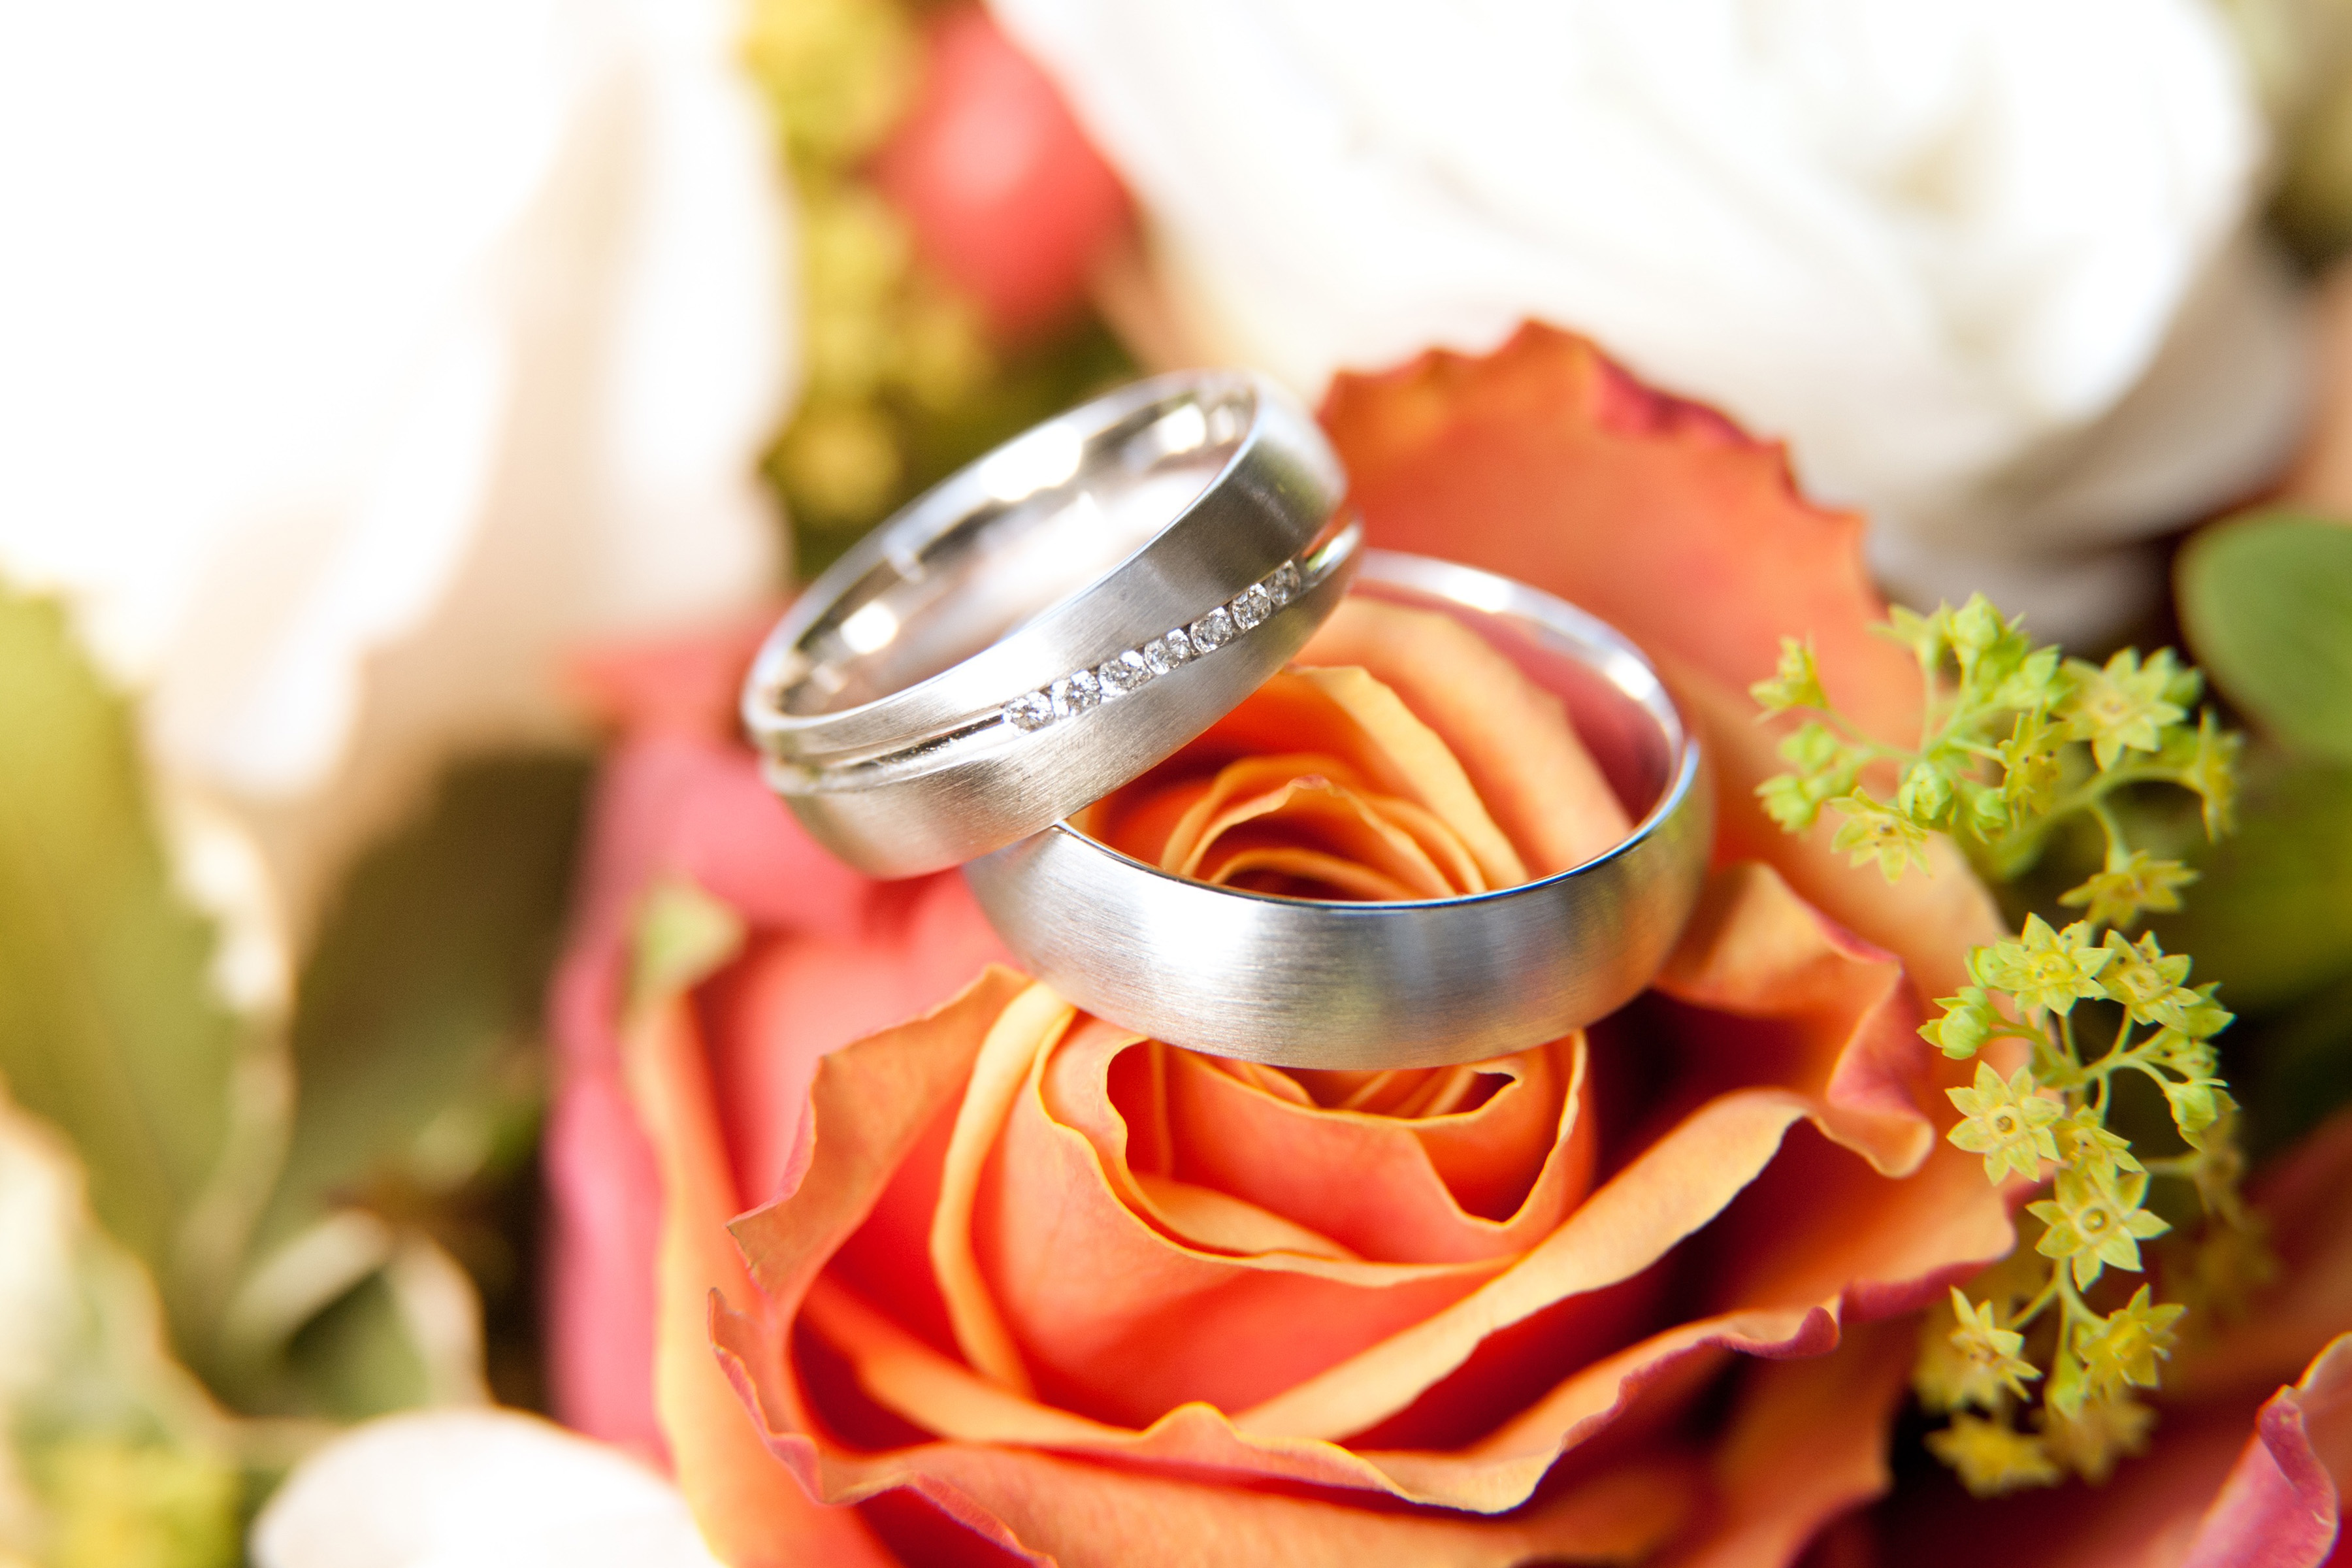 Wedding Rings Background Images - Free Download on Freepik